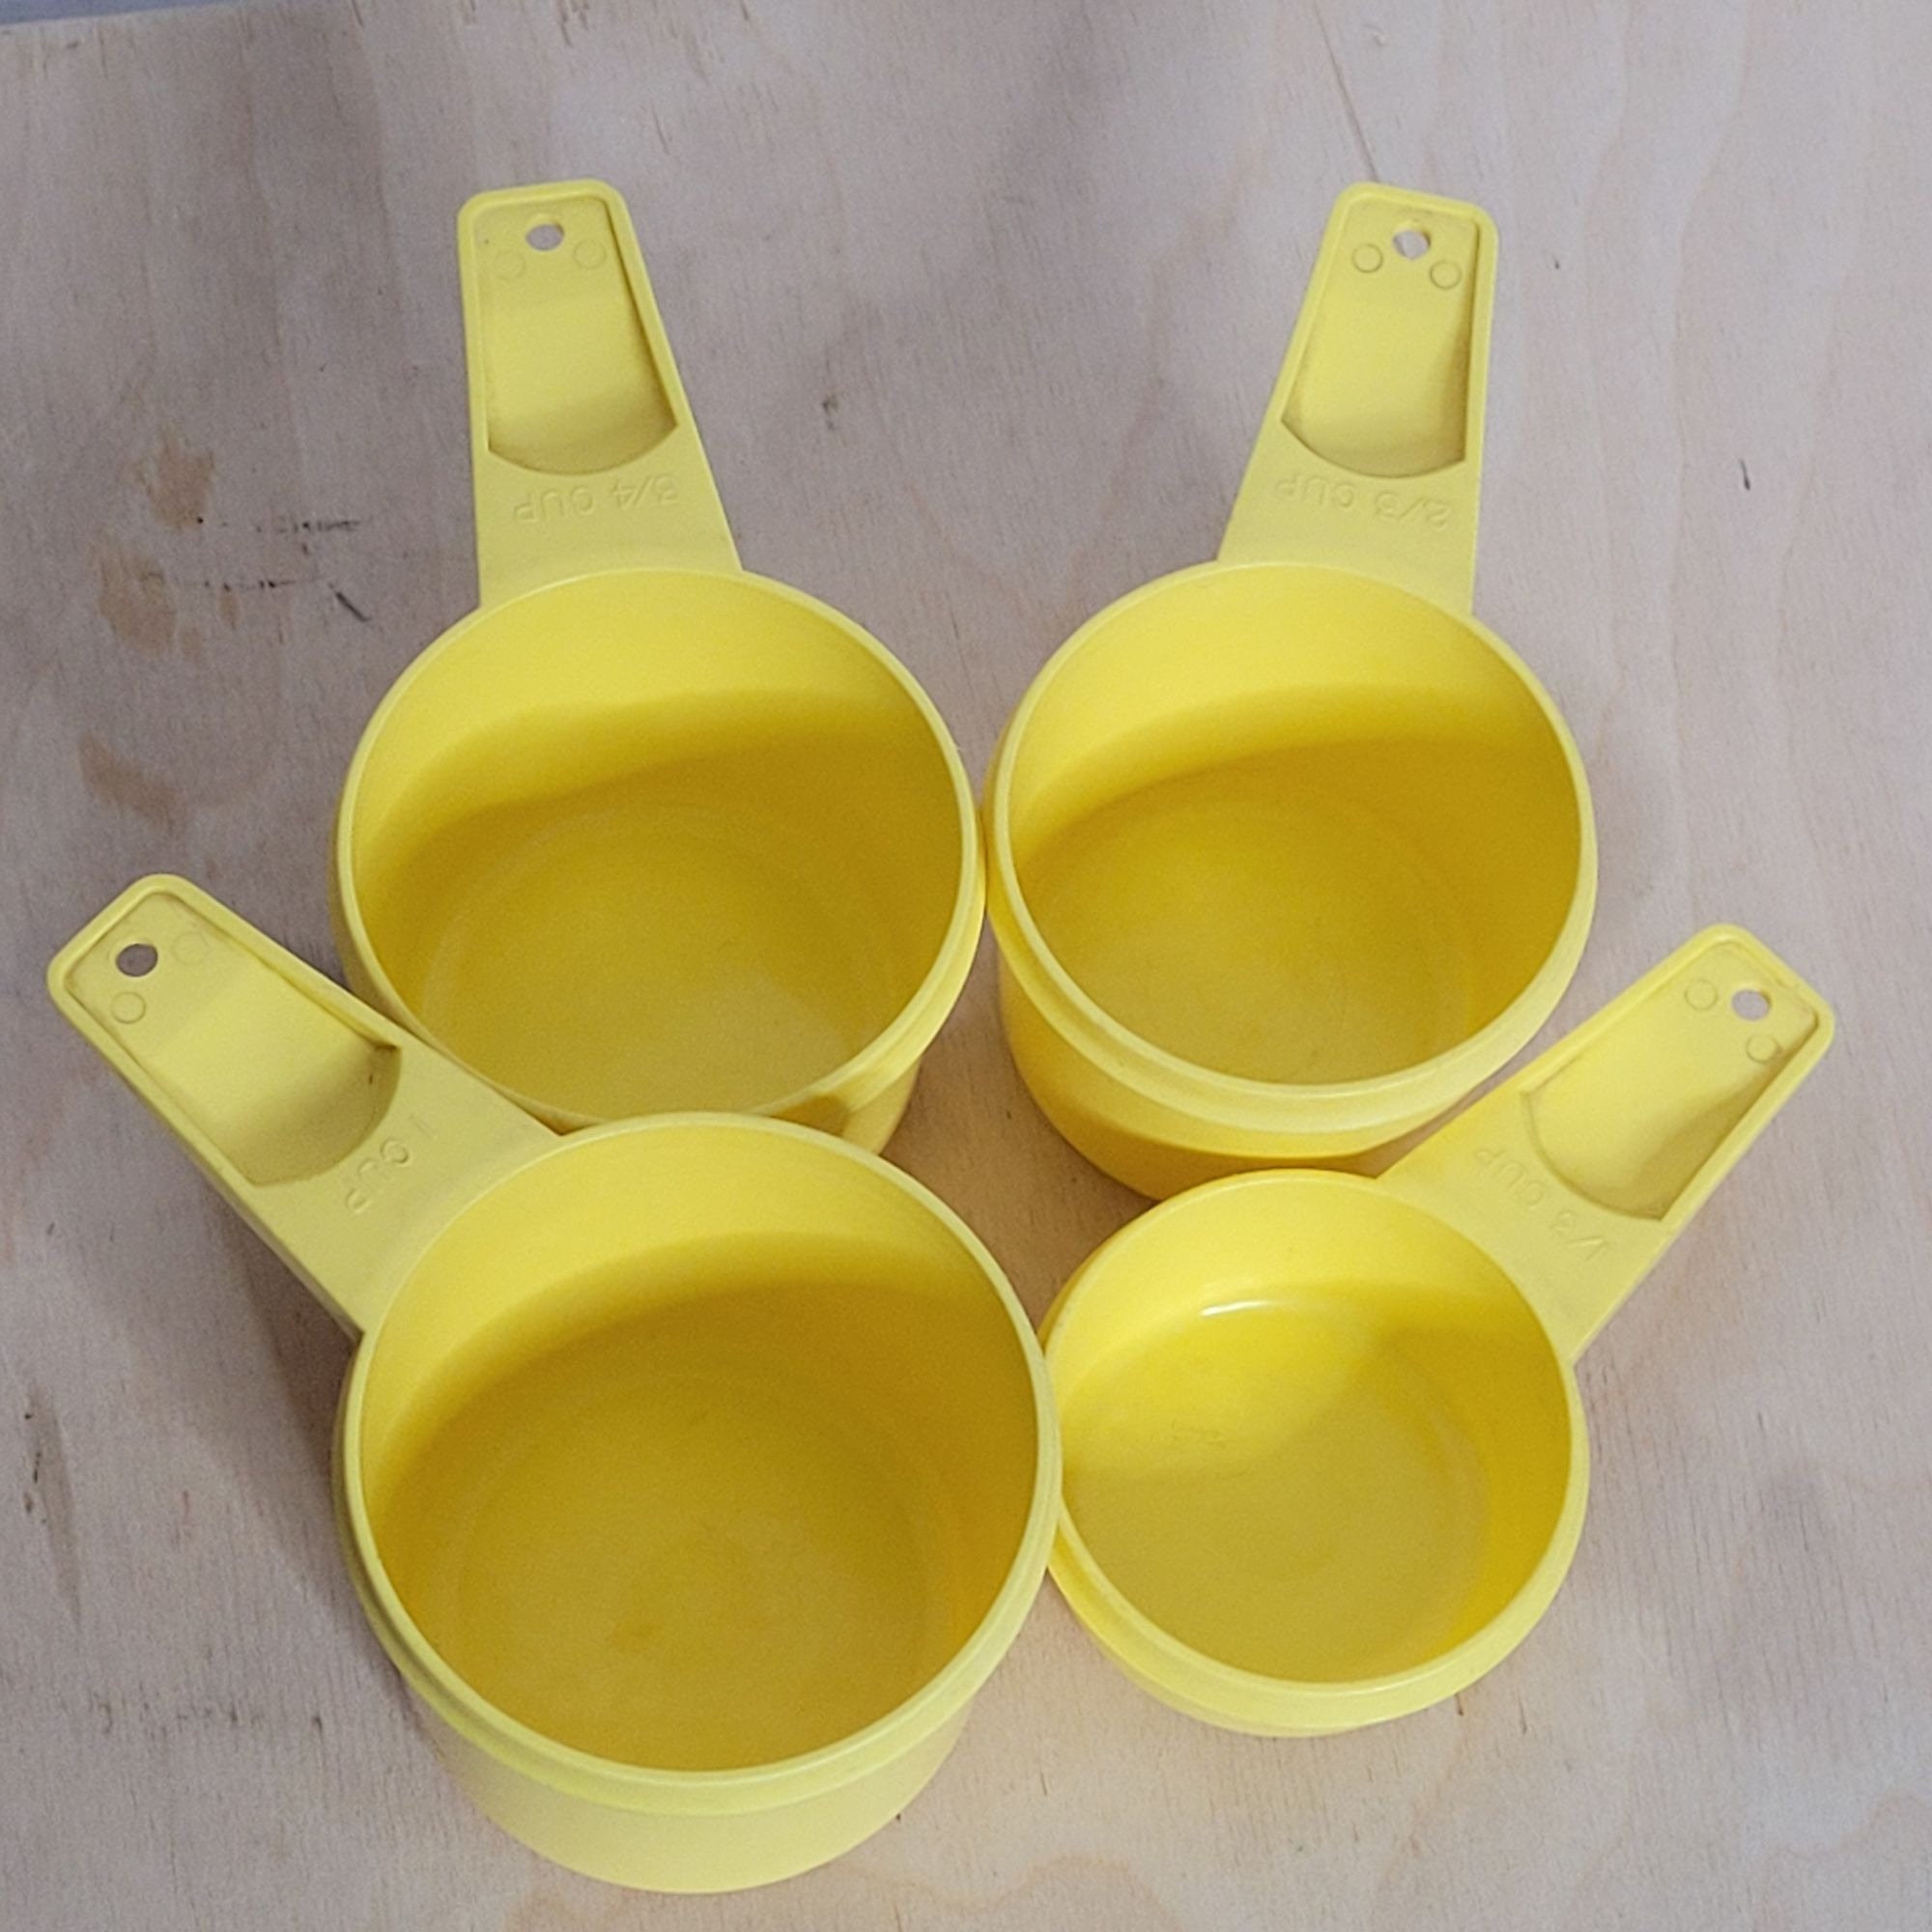 Vintage Tupperware Measuring Spoons Citrus Yellow Set of 7 